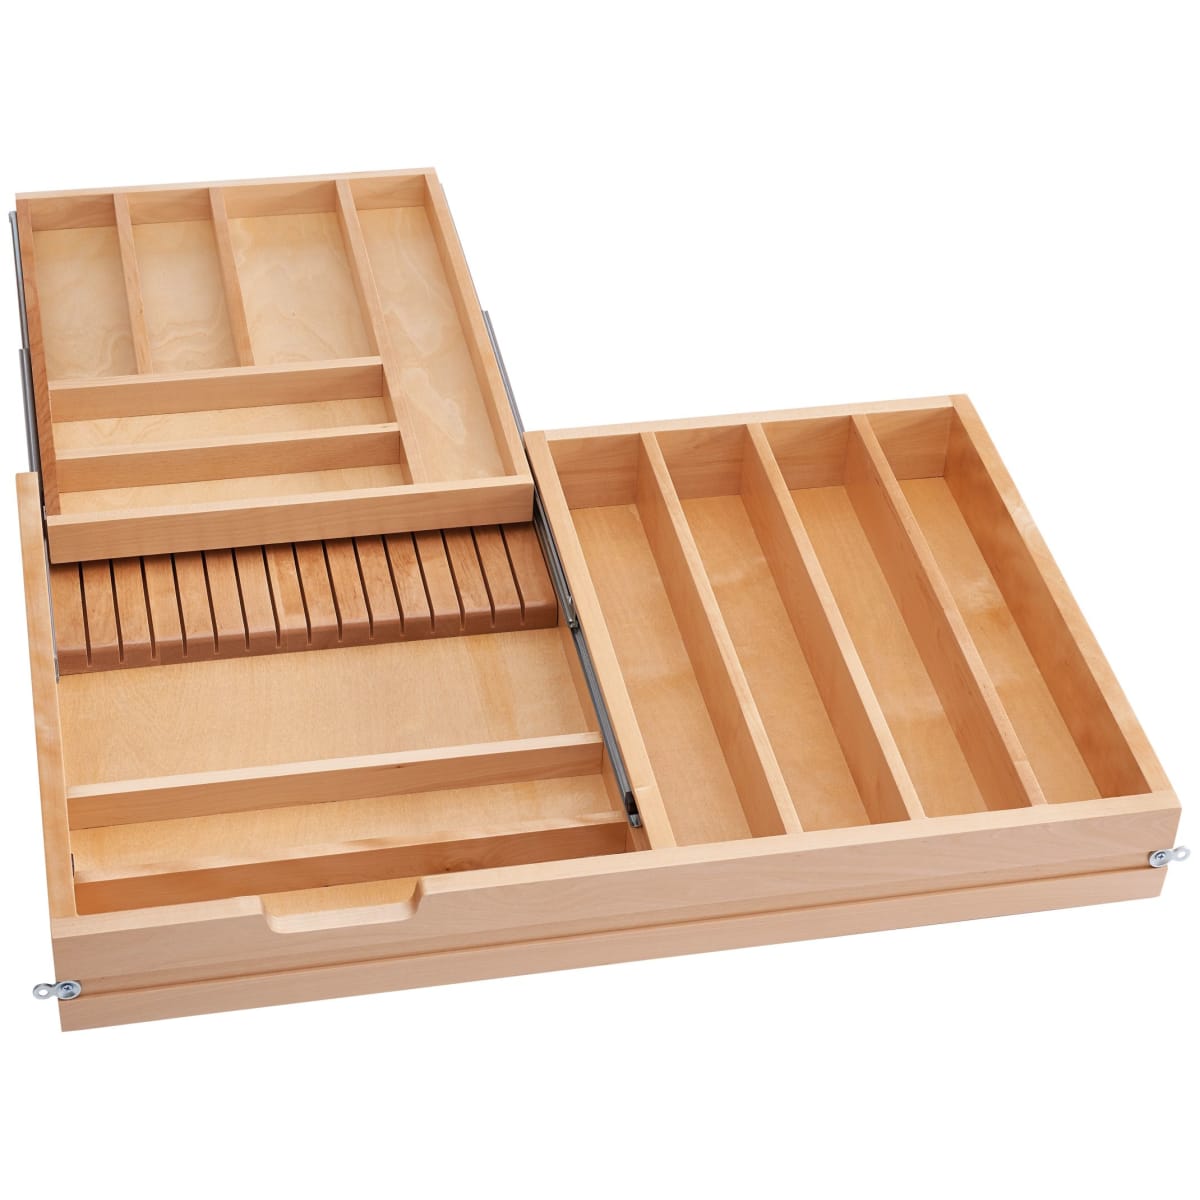 Rev-A-Shelf 33 in Wood Spice Drawer Insert 4SDI-36-1